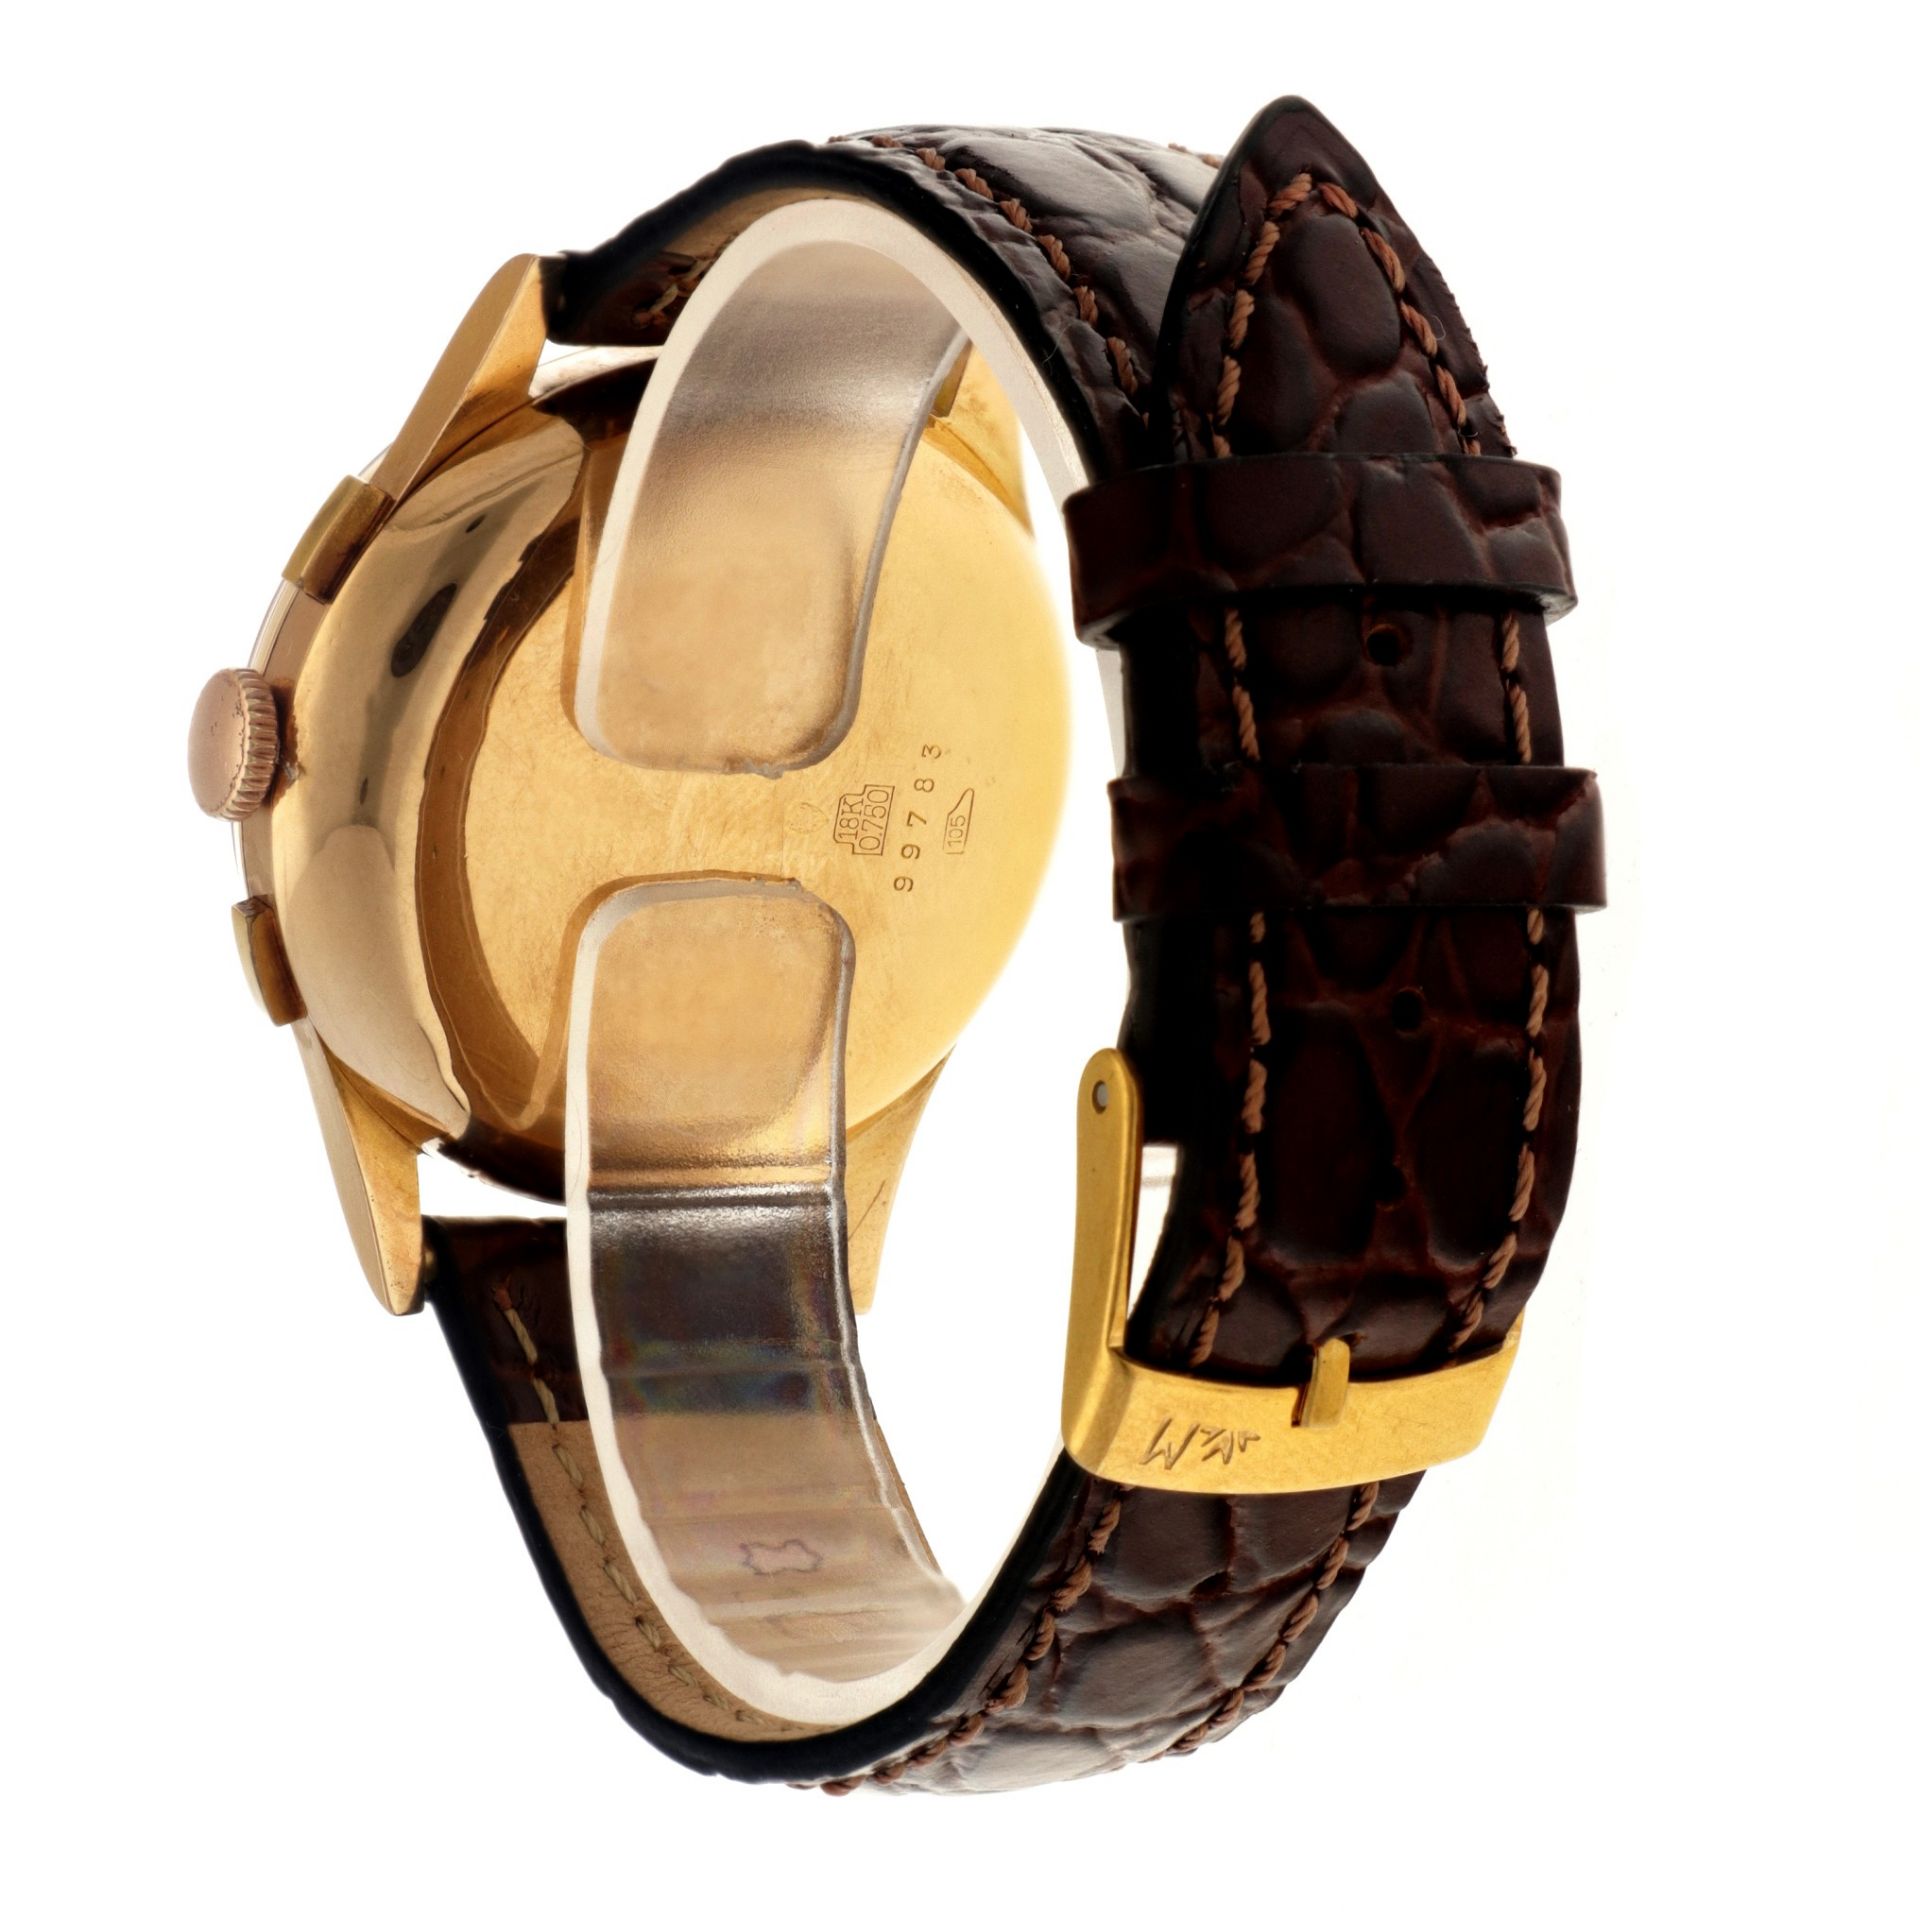 No Reserve - Titus Chronograph Suisse 18K. - Men's watch. - Image 3 of 6